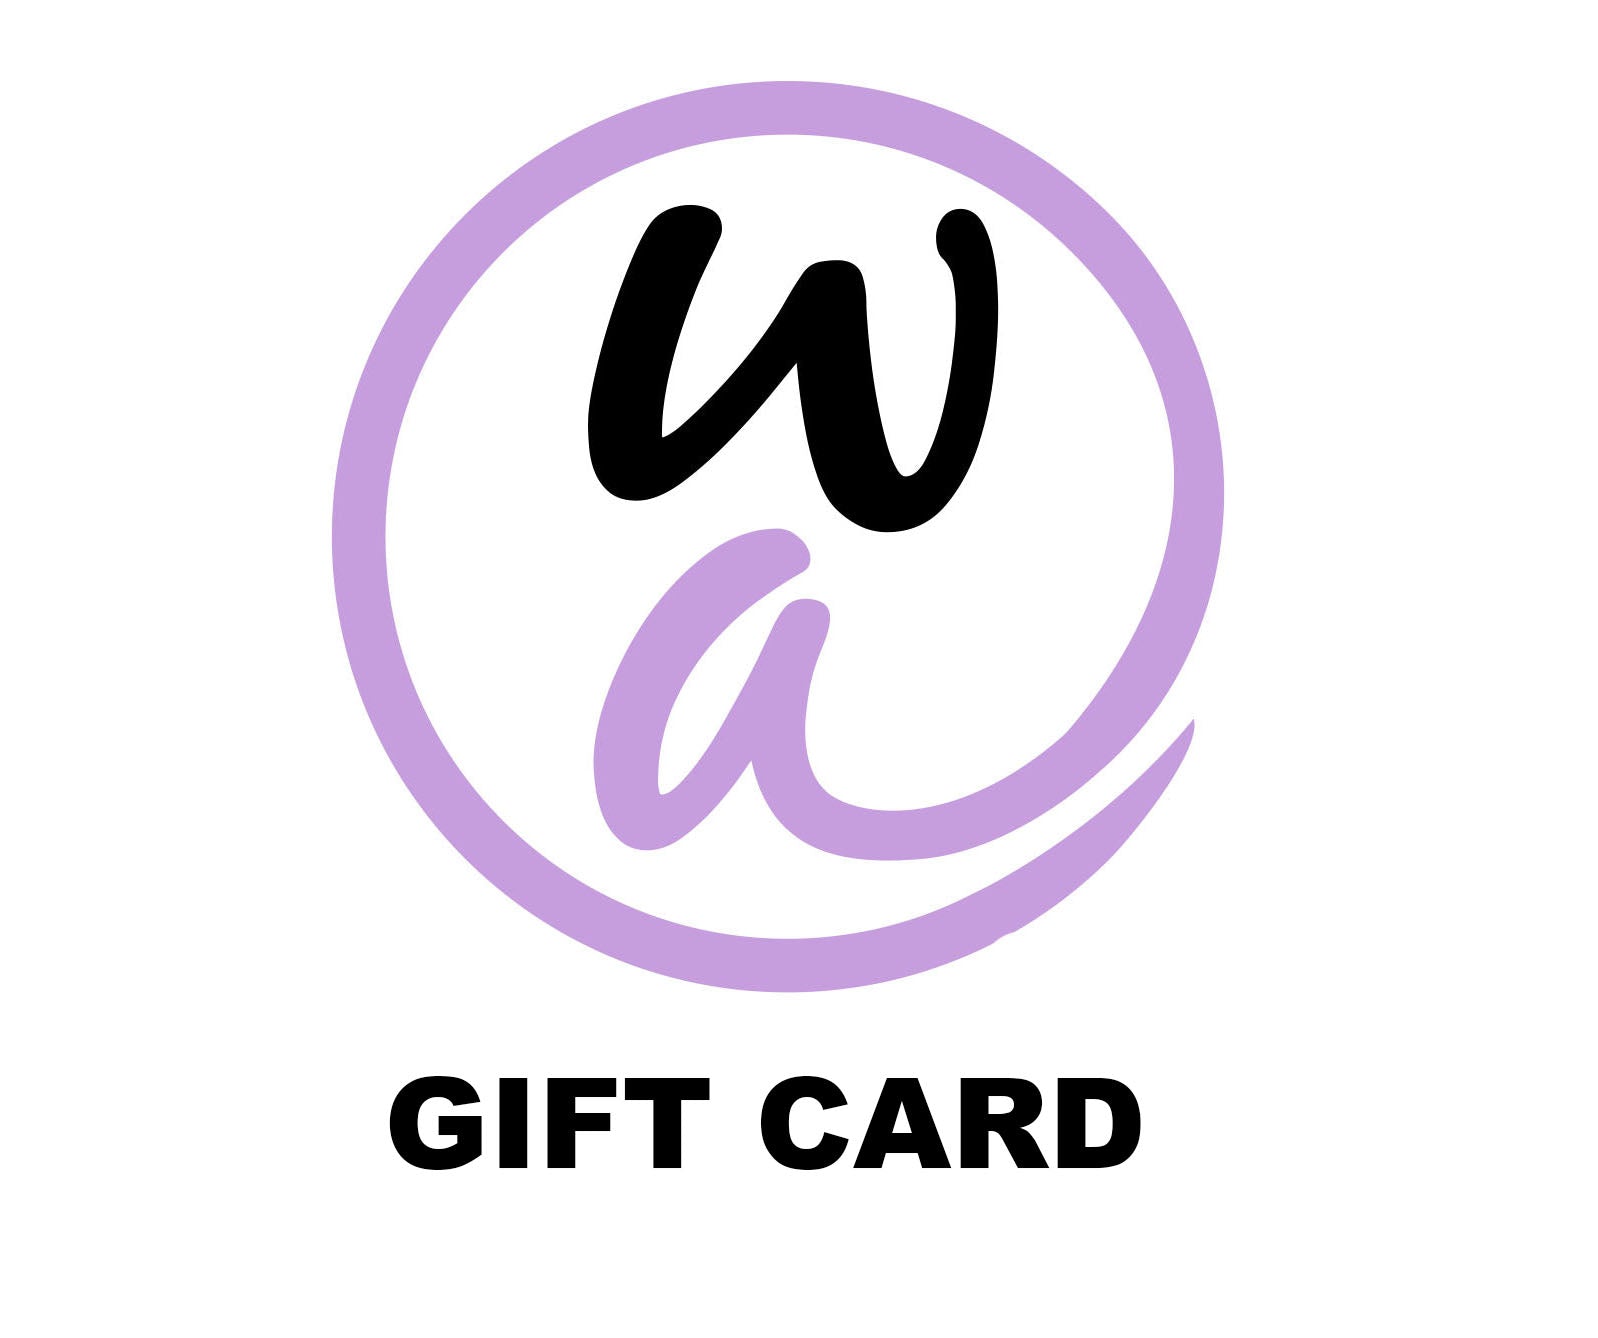 Gift Cards - $75.00 - Wonderful Addition